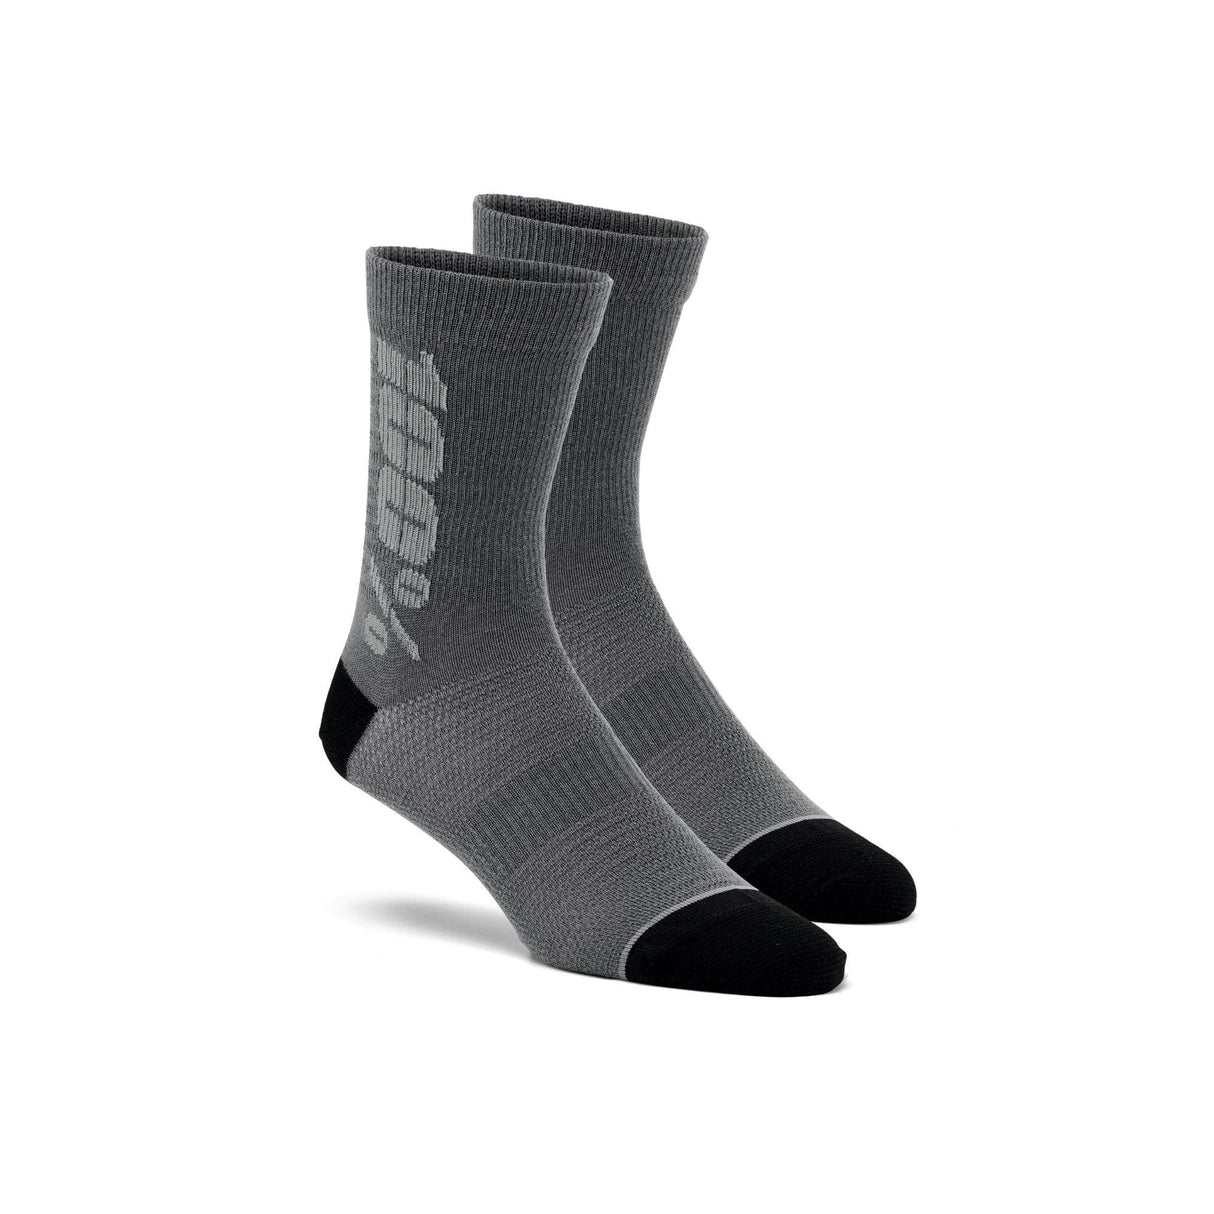 100% RYTHYM Merino Wool Performance Socks Charcoal / Grey L/XL